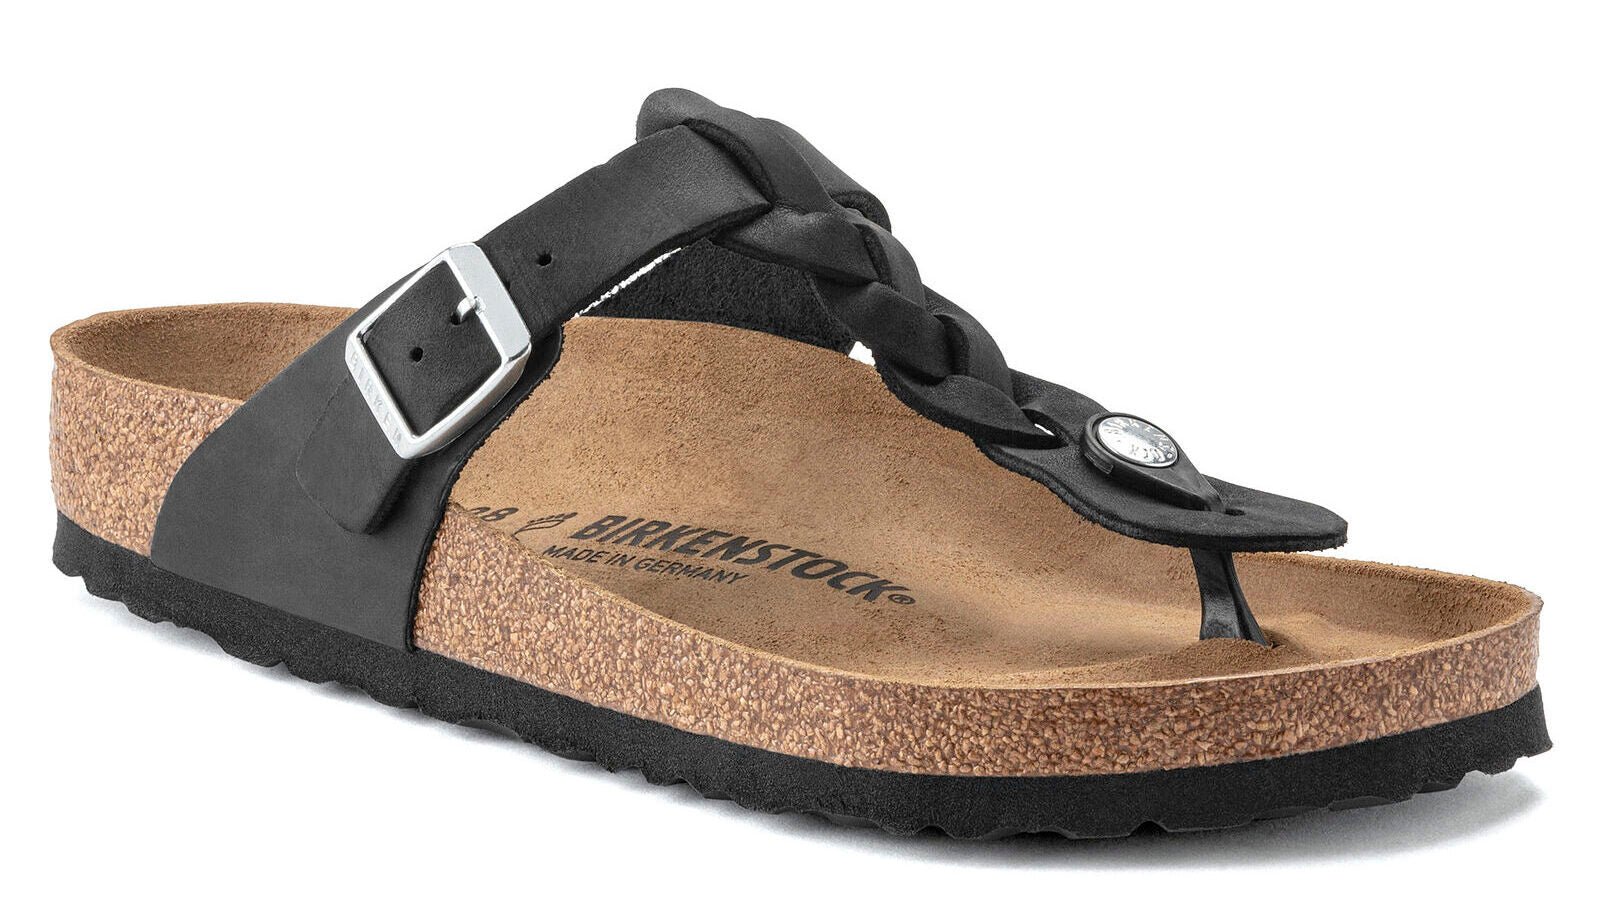 Birkenstock Gizeh Braided Black Oiled Leather Original Footbed - Grady’s Feet Essentials - Birkenstock